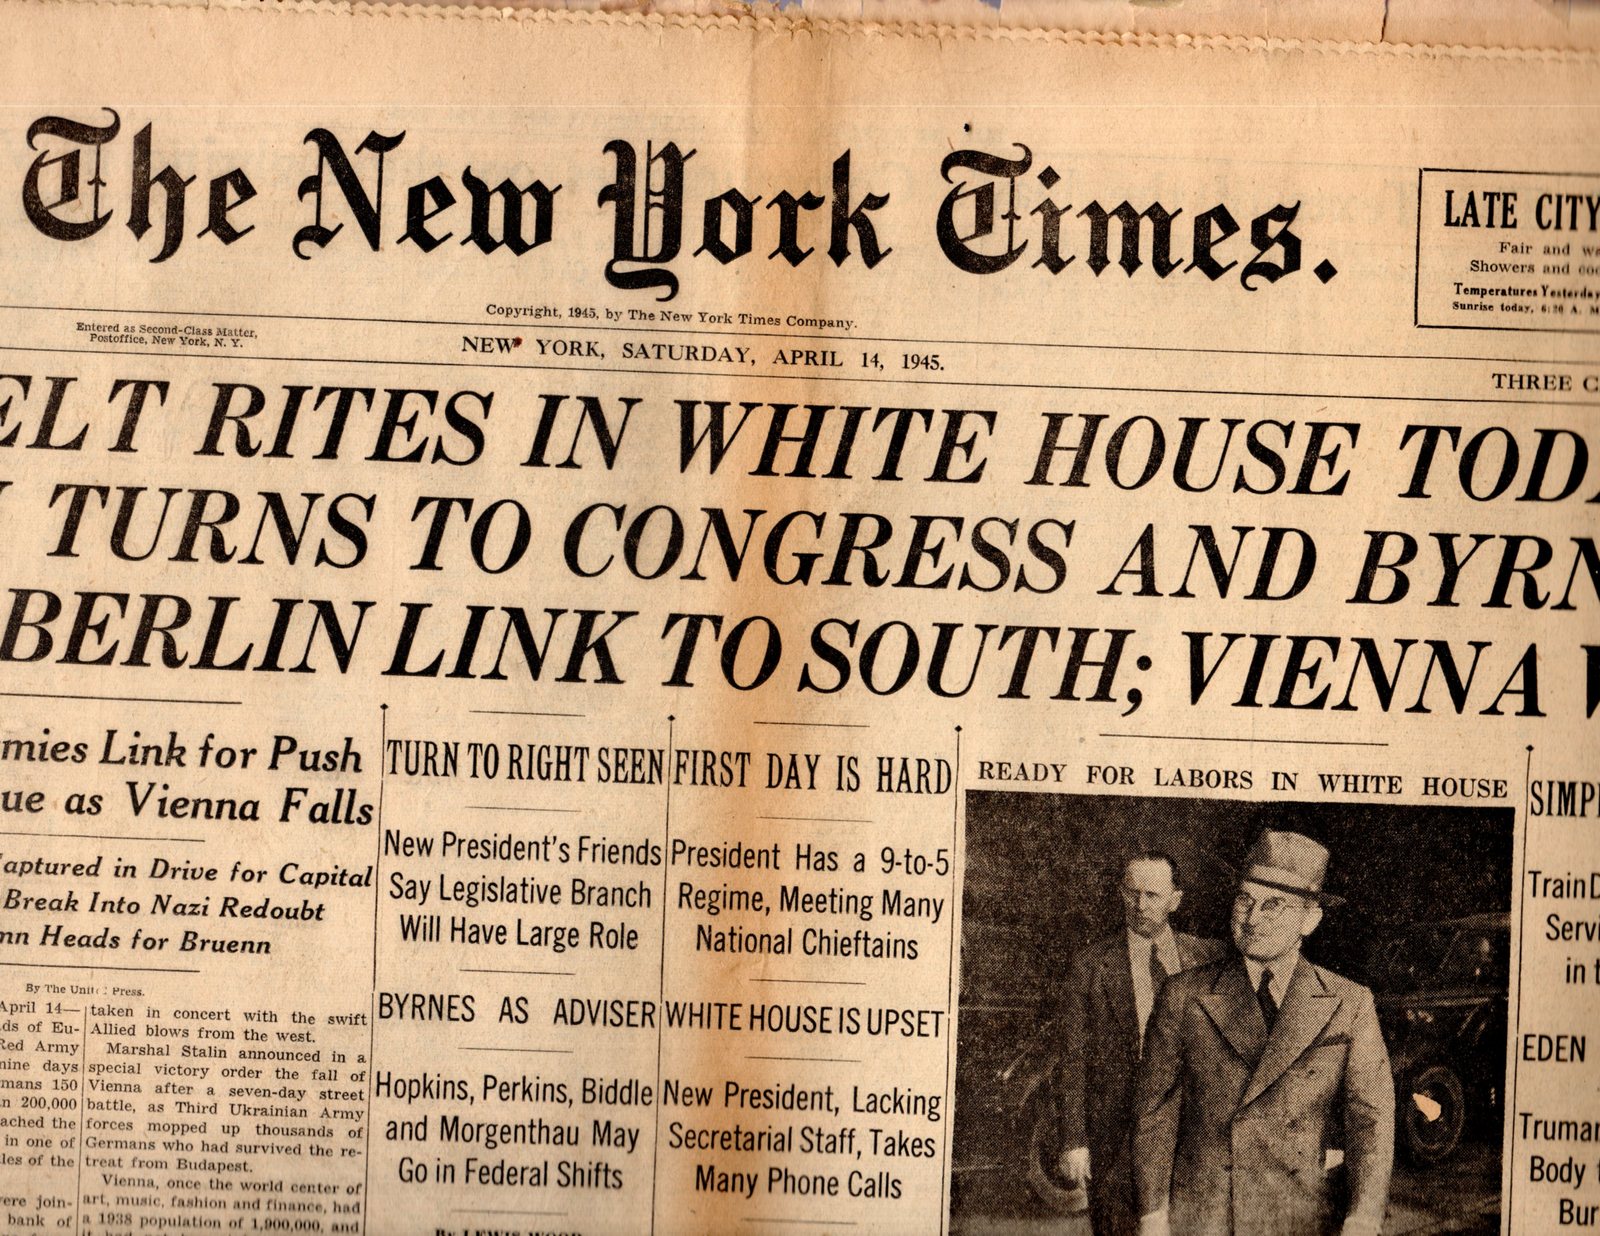 The New York Times Newspaper Saturday April 14 1945 1940 69